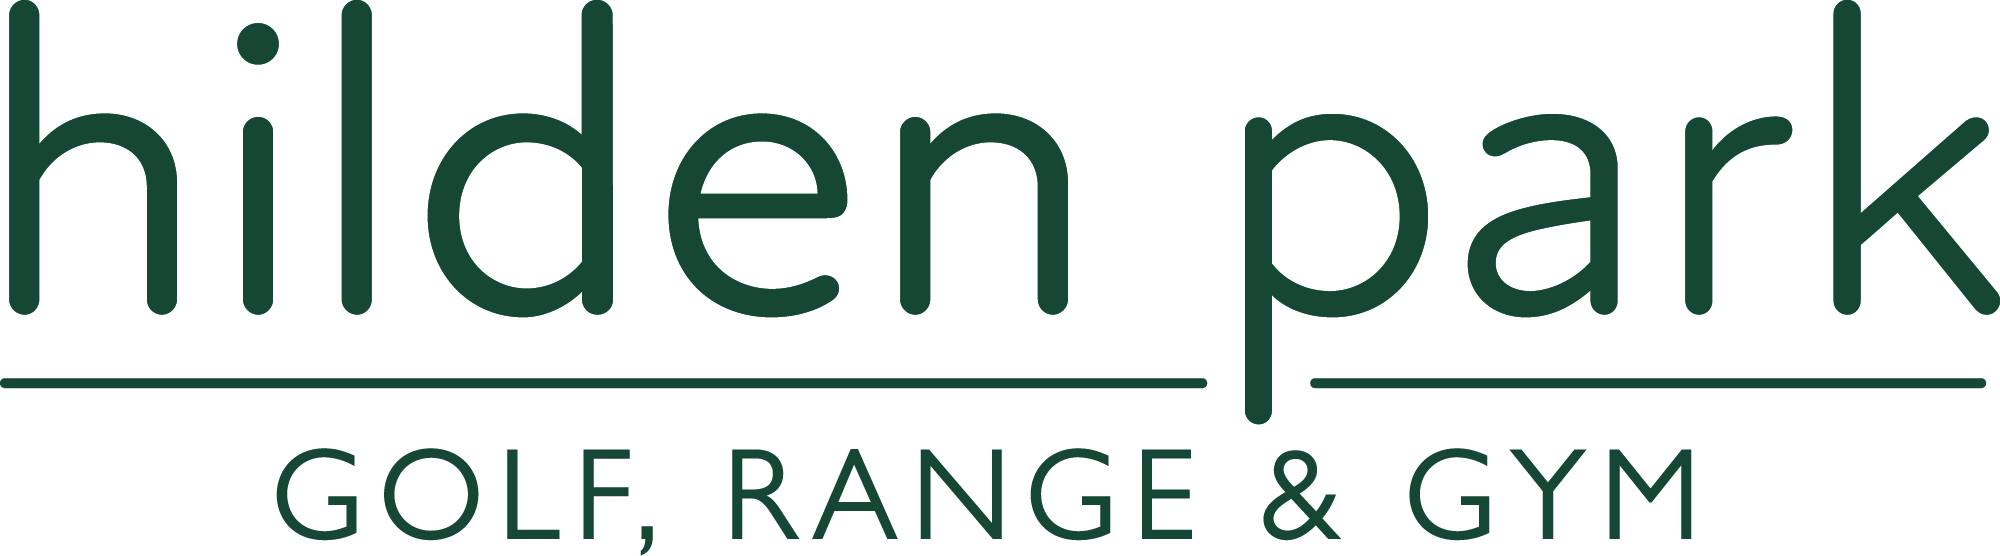 HILDEN PARK GOLF RANGE & GYM logo